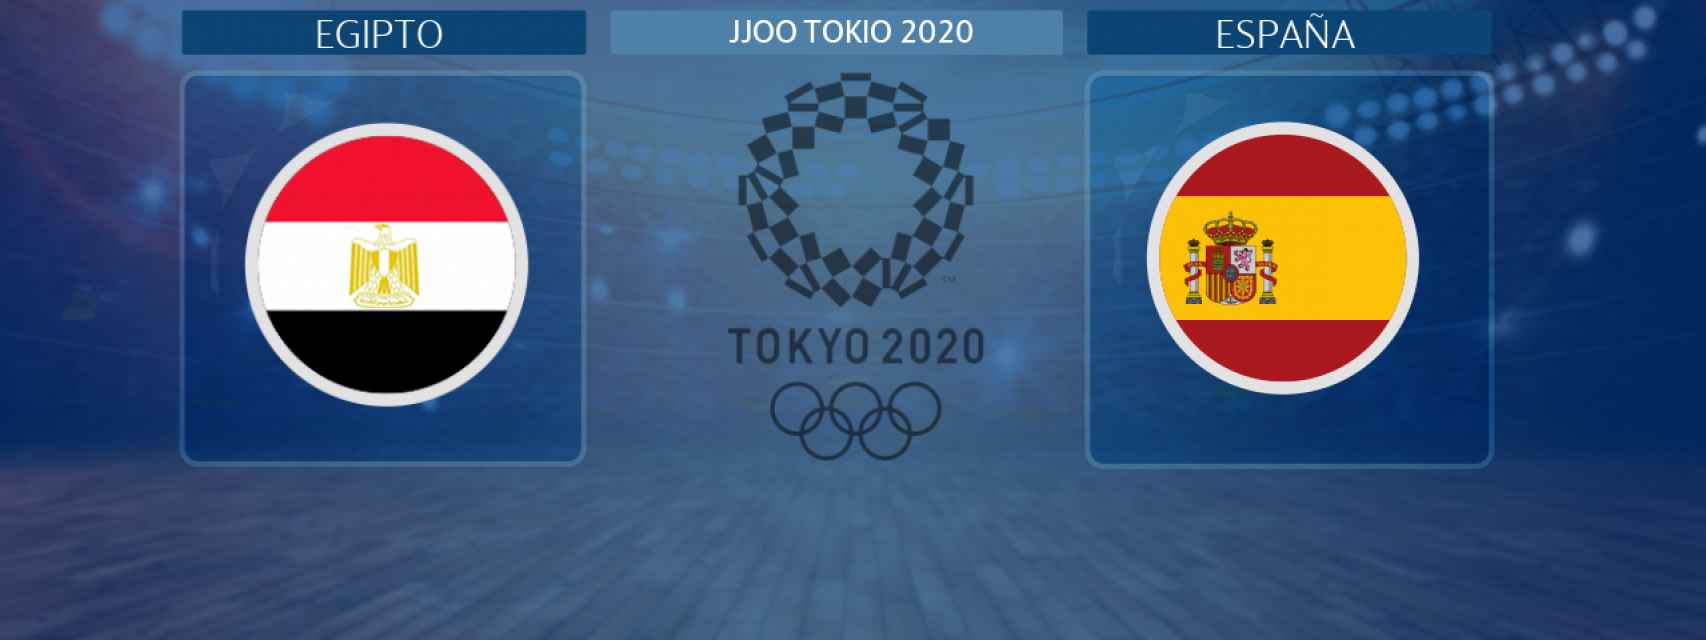 Egipto - España, partido de los JJOO de Tokio 2020